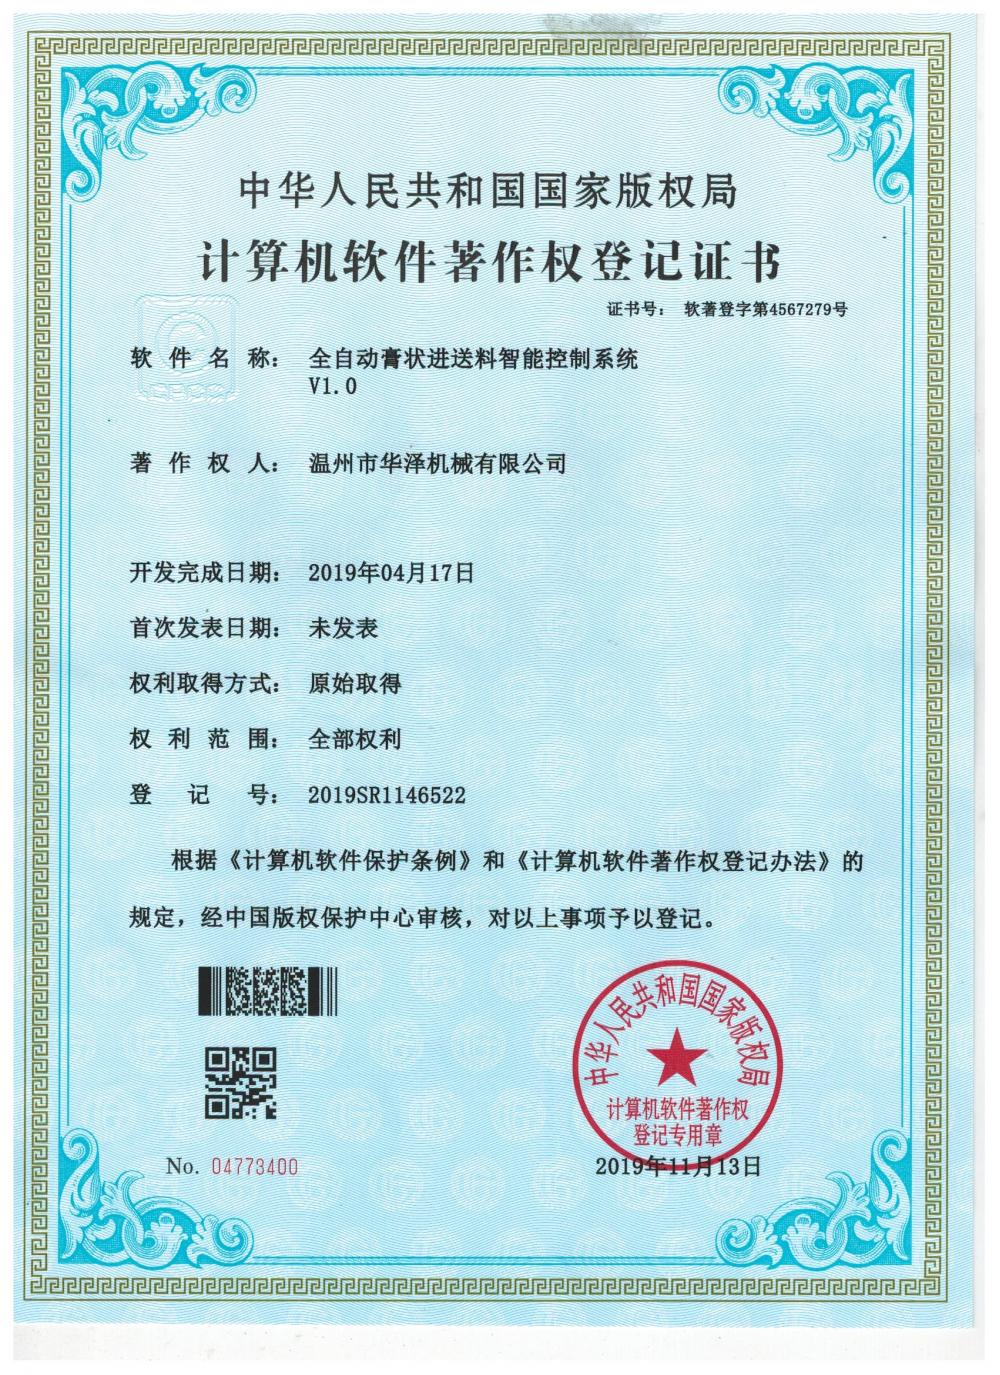 Computer software copyright Registration Certificate